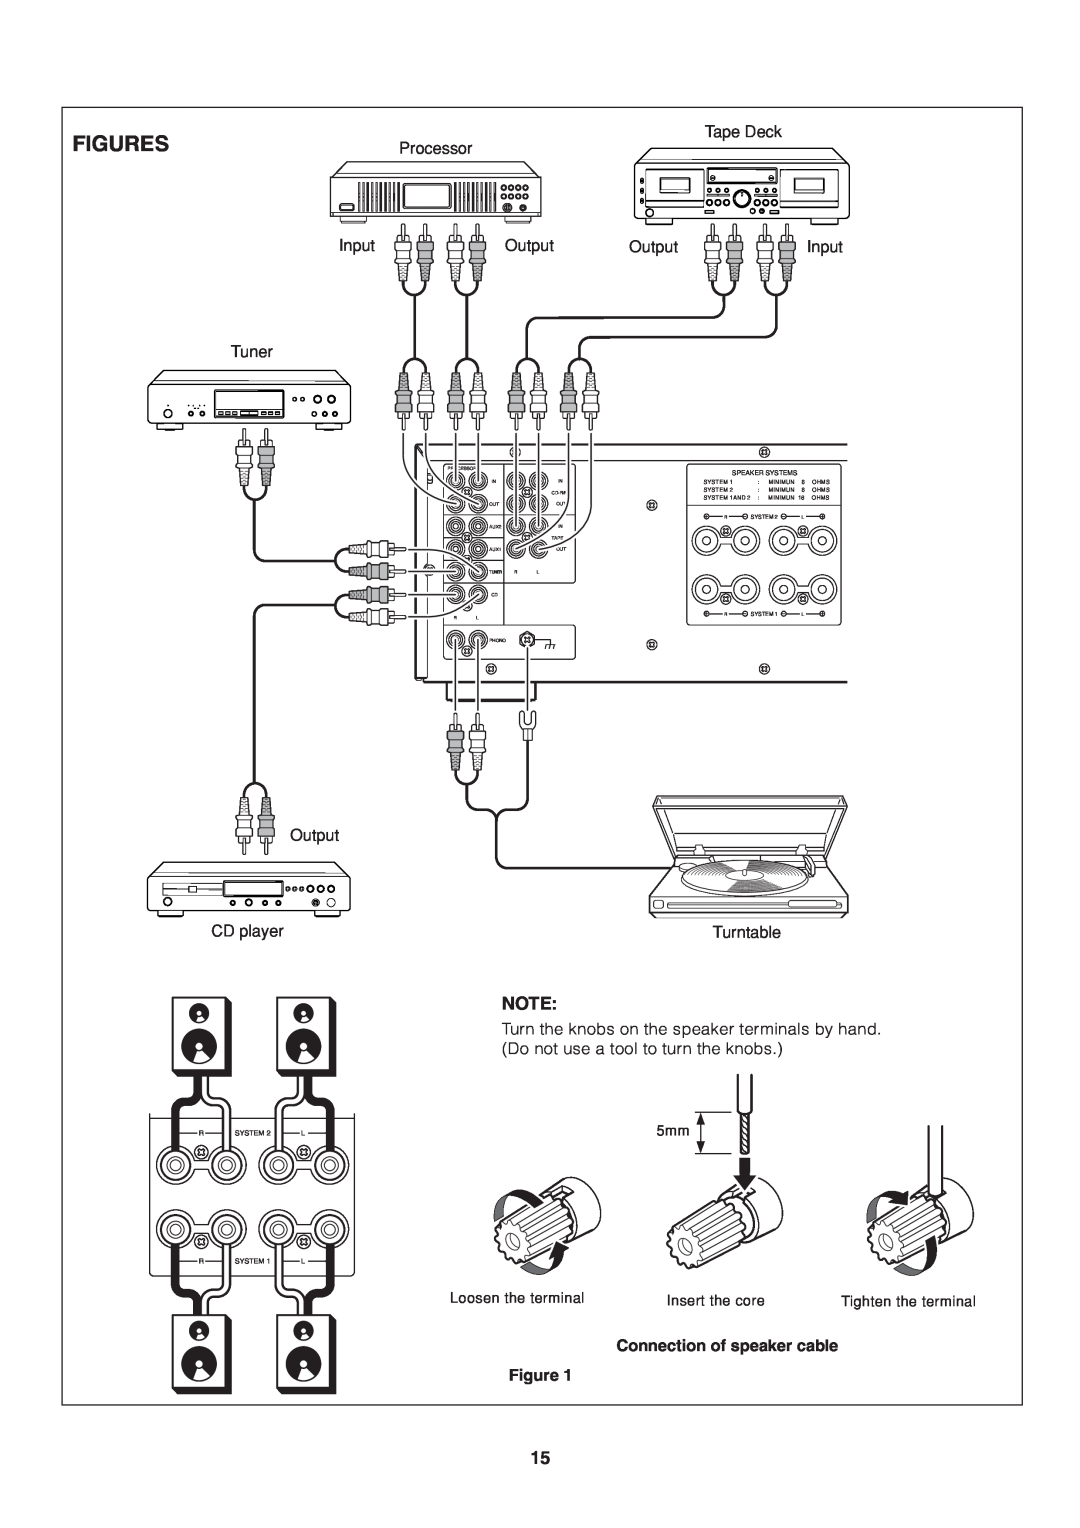 Marantz PM7000 manual Figures, Connection of speaker cable Figure 